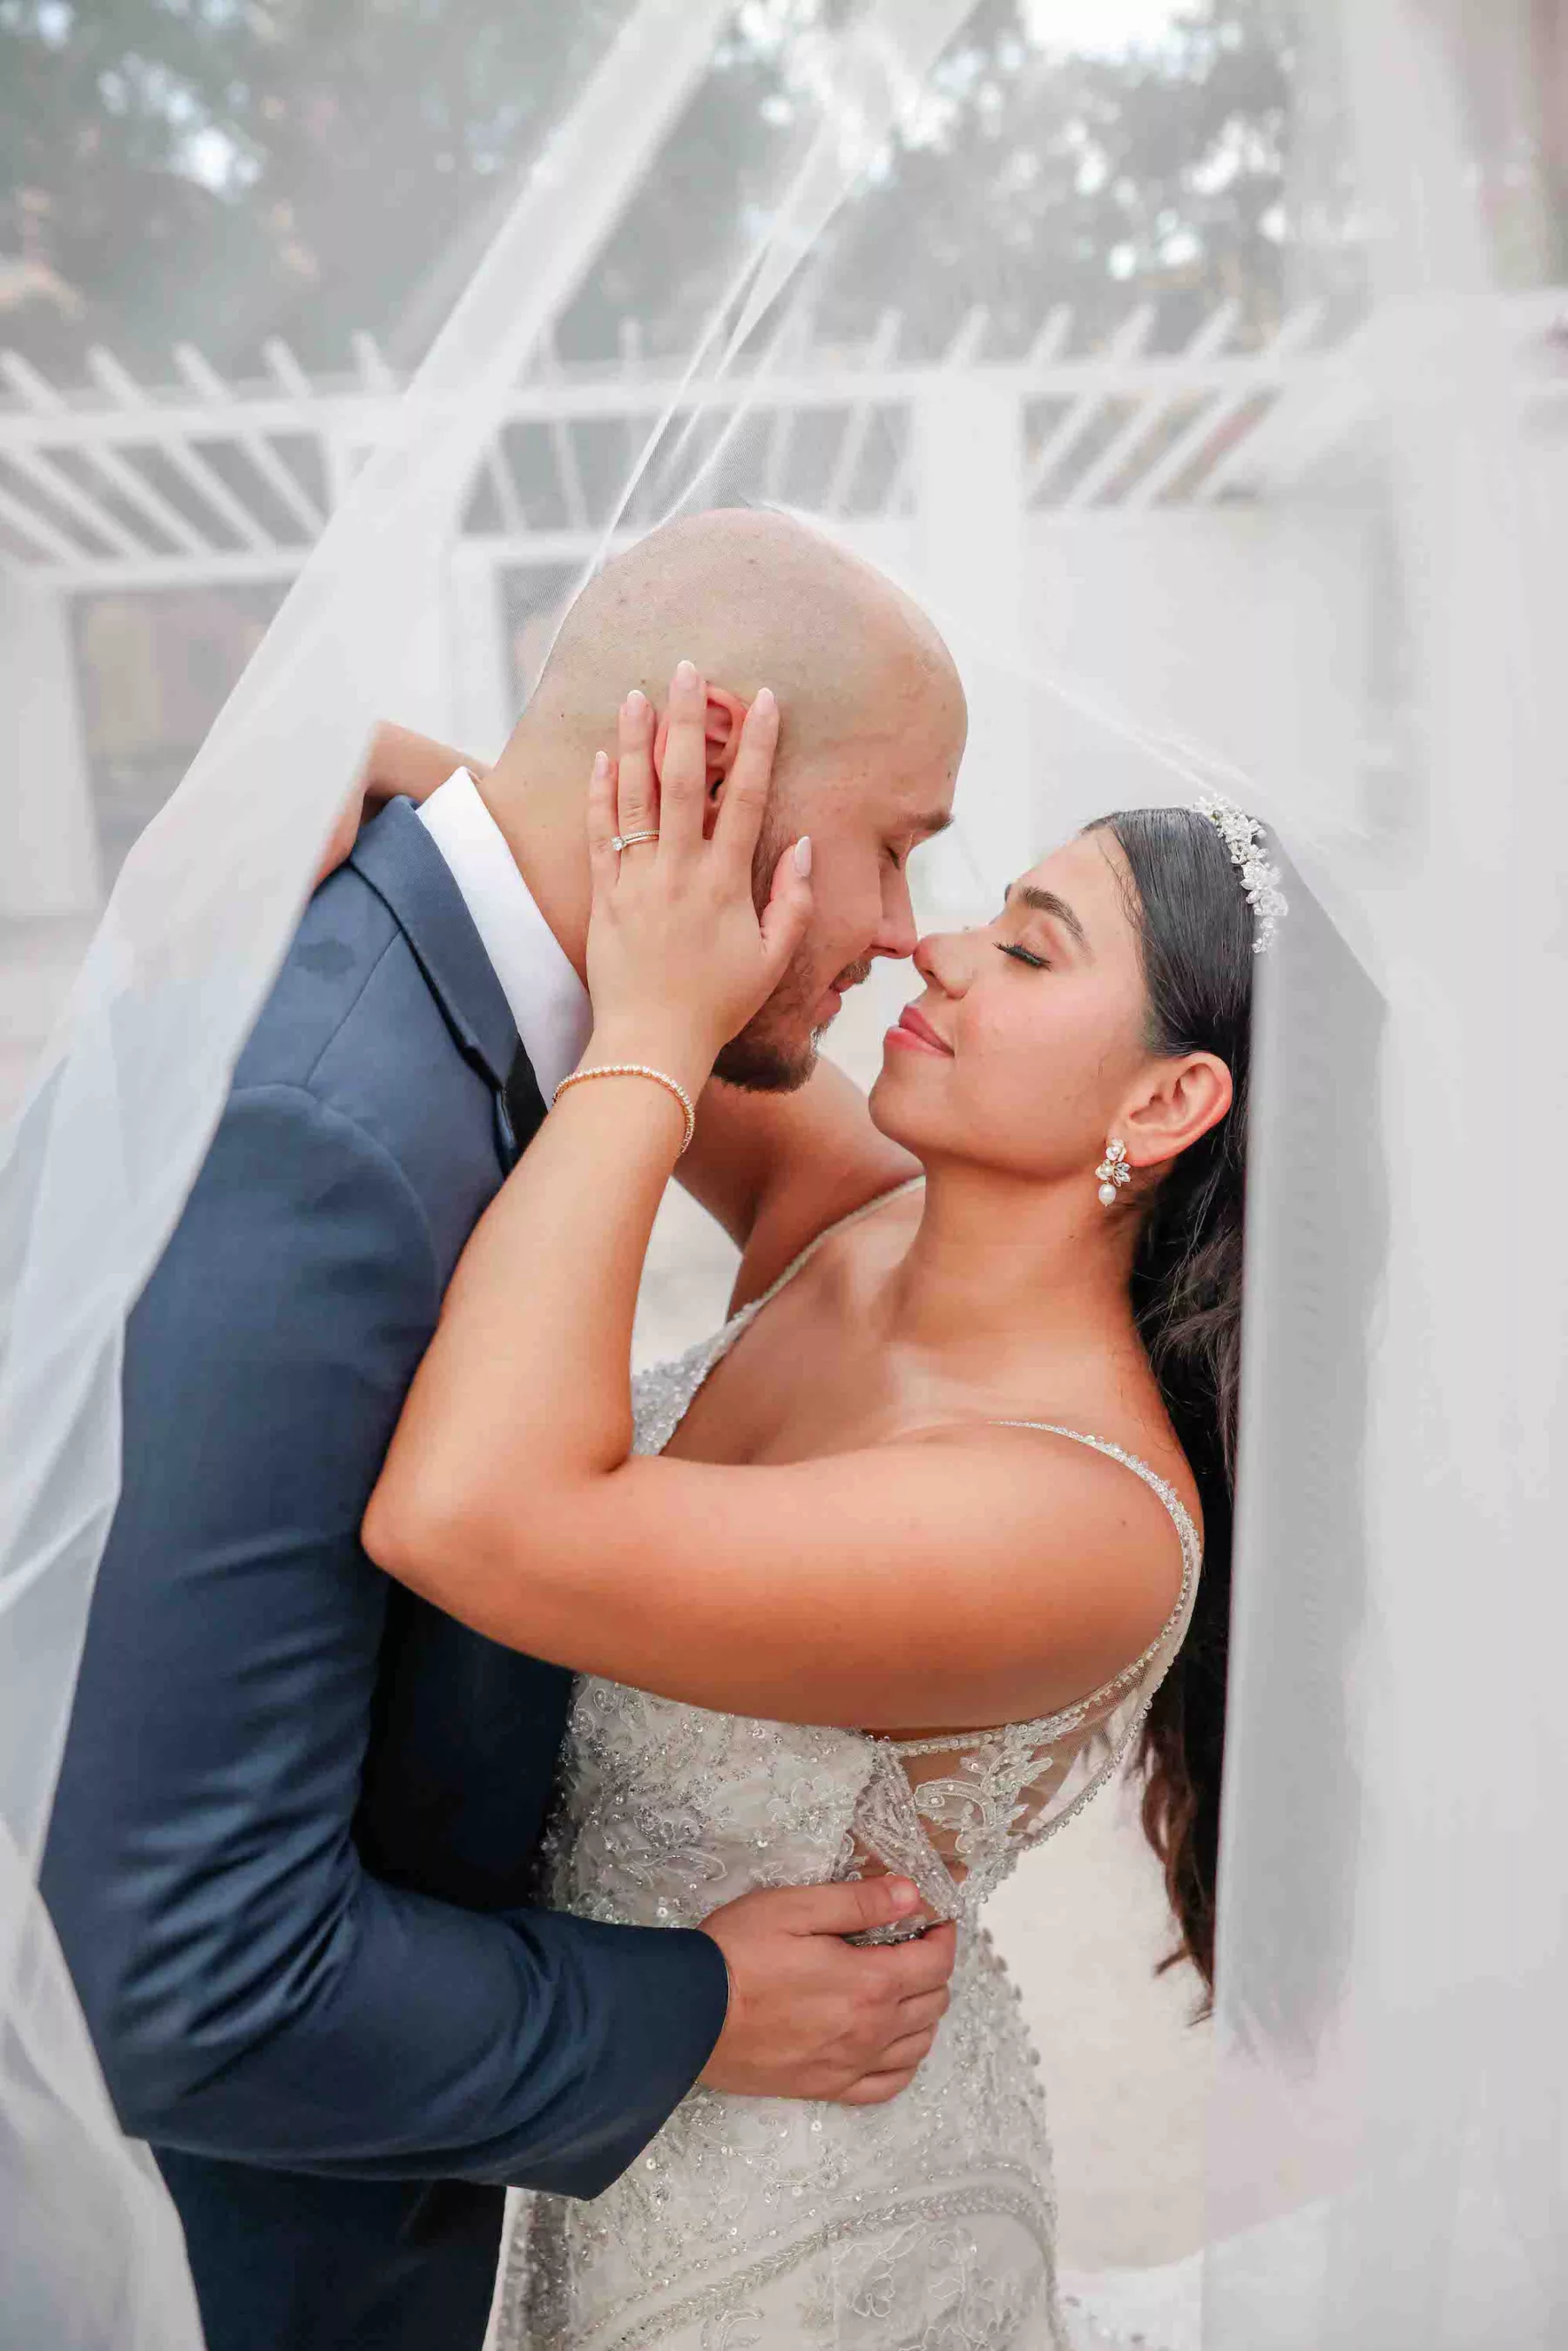 Romantic Bride and Groom Veil Wedding Portrait | Tampa Bay Photographer Lifelong Photography Studio